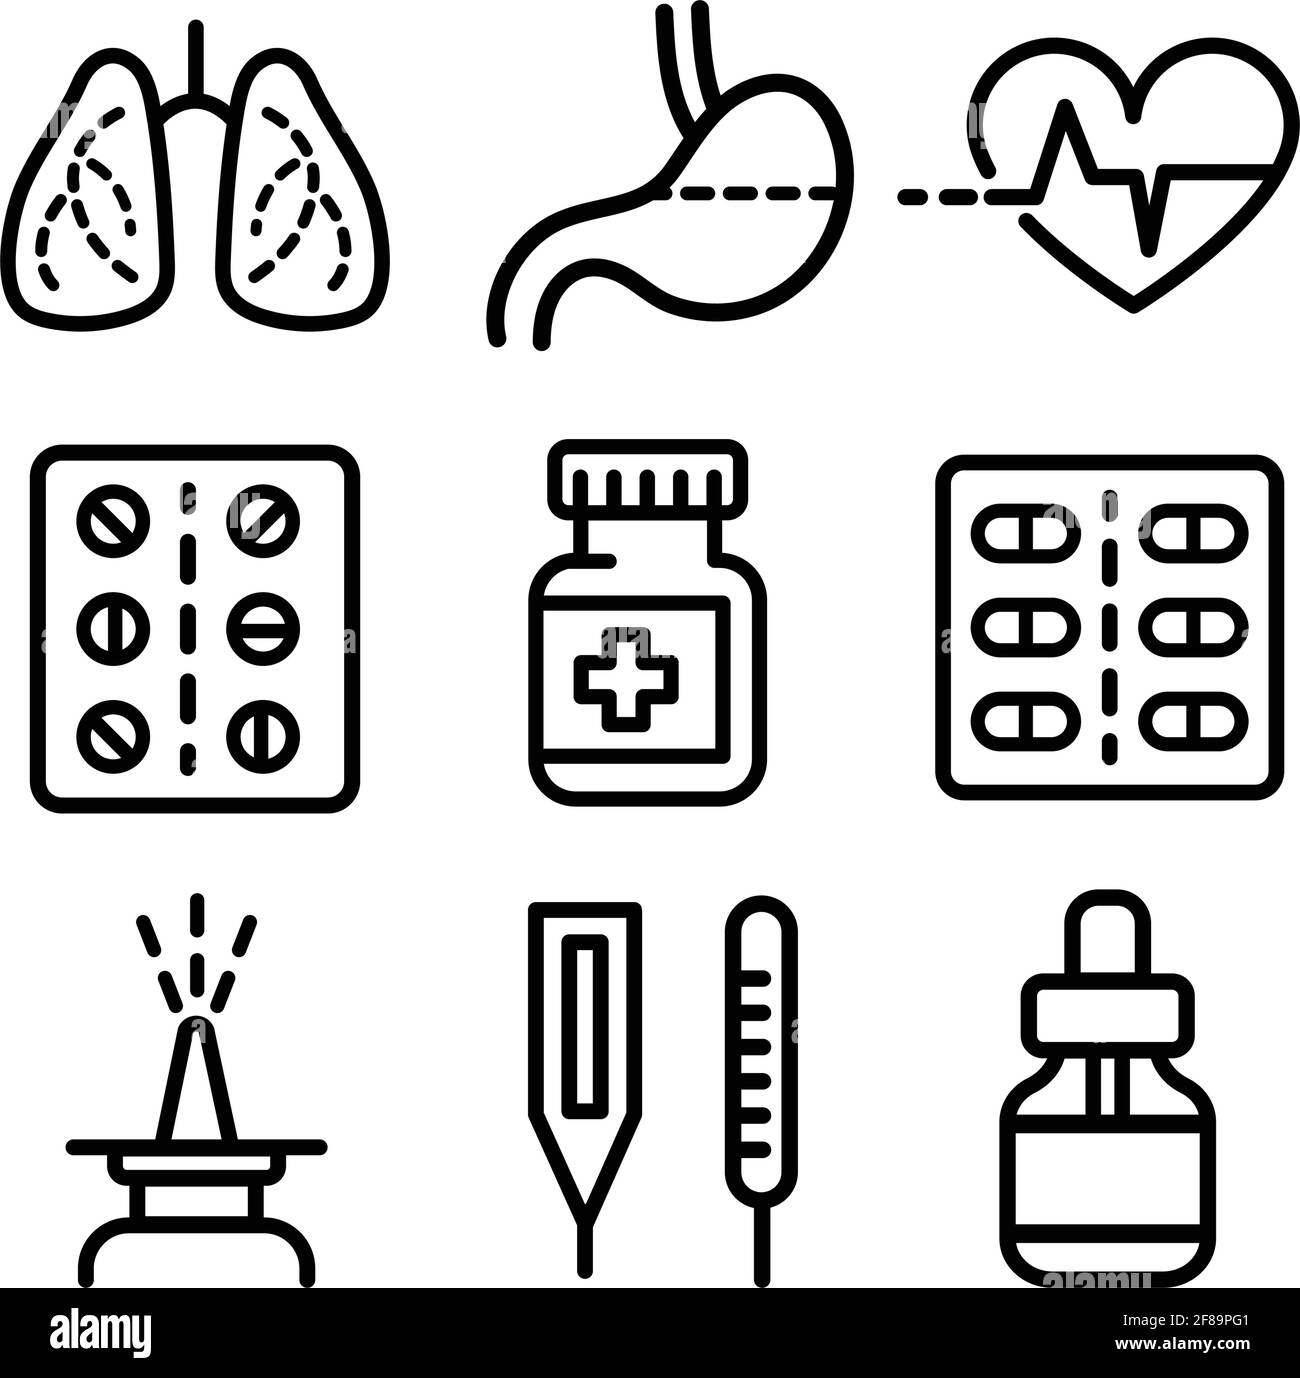 Outline web simple icon set. Medicine and Health symbols Stock Vector